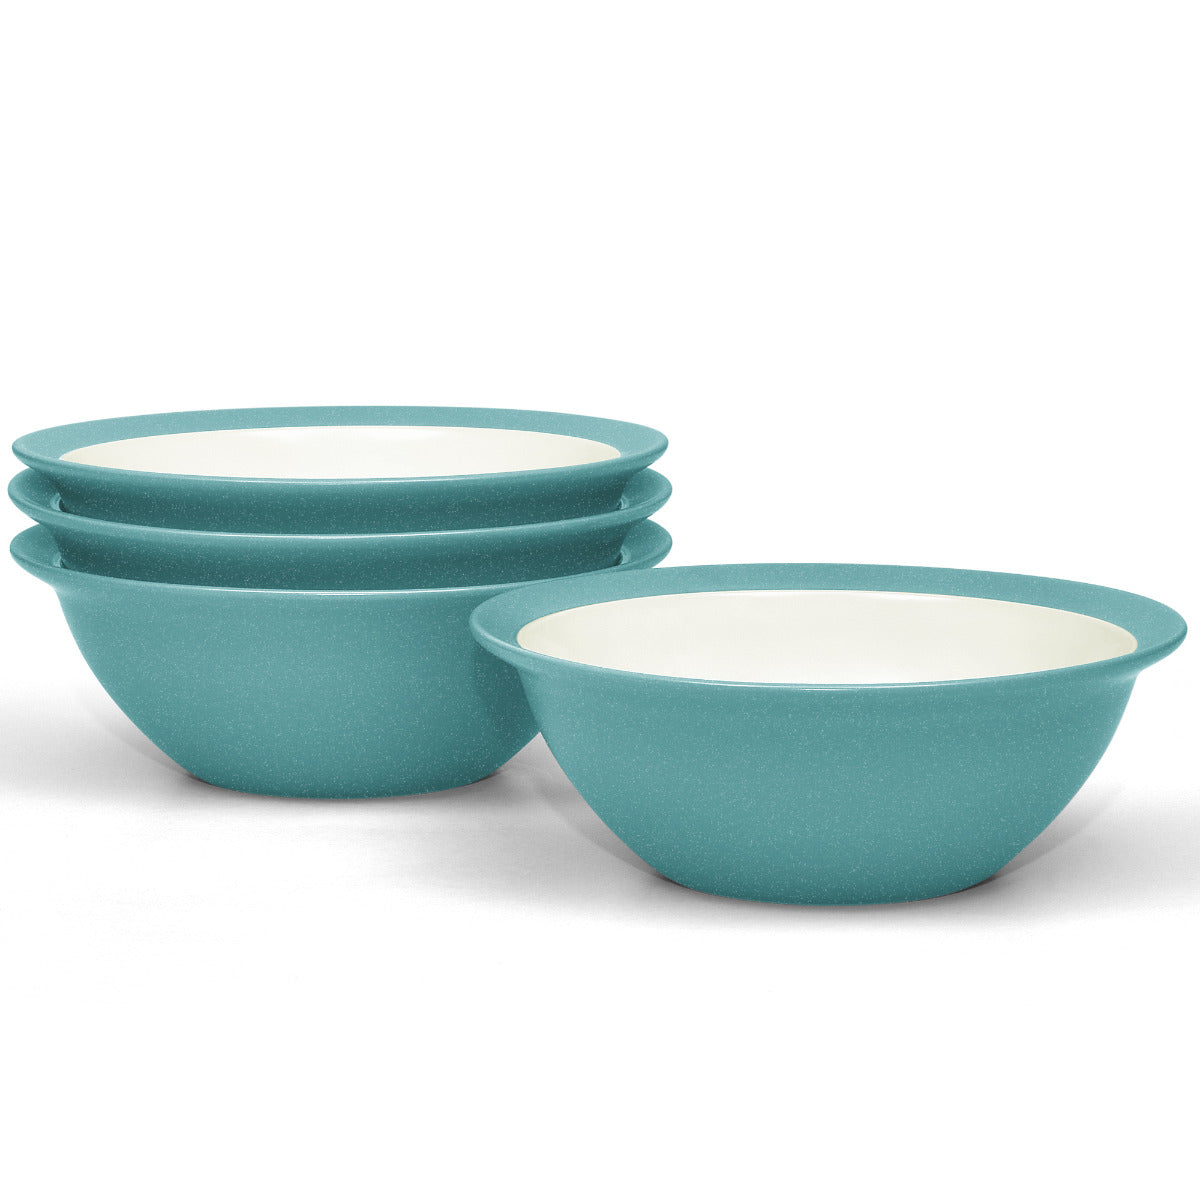 Noritake Turquoise Colorwave Curve Dinnerware Set